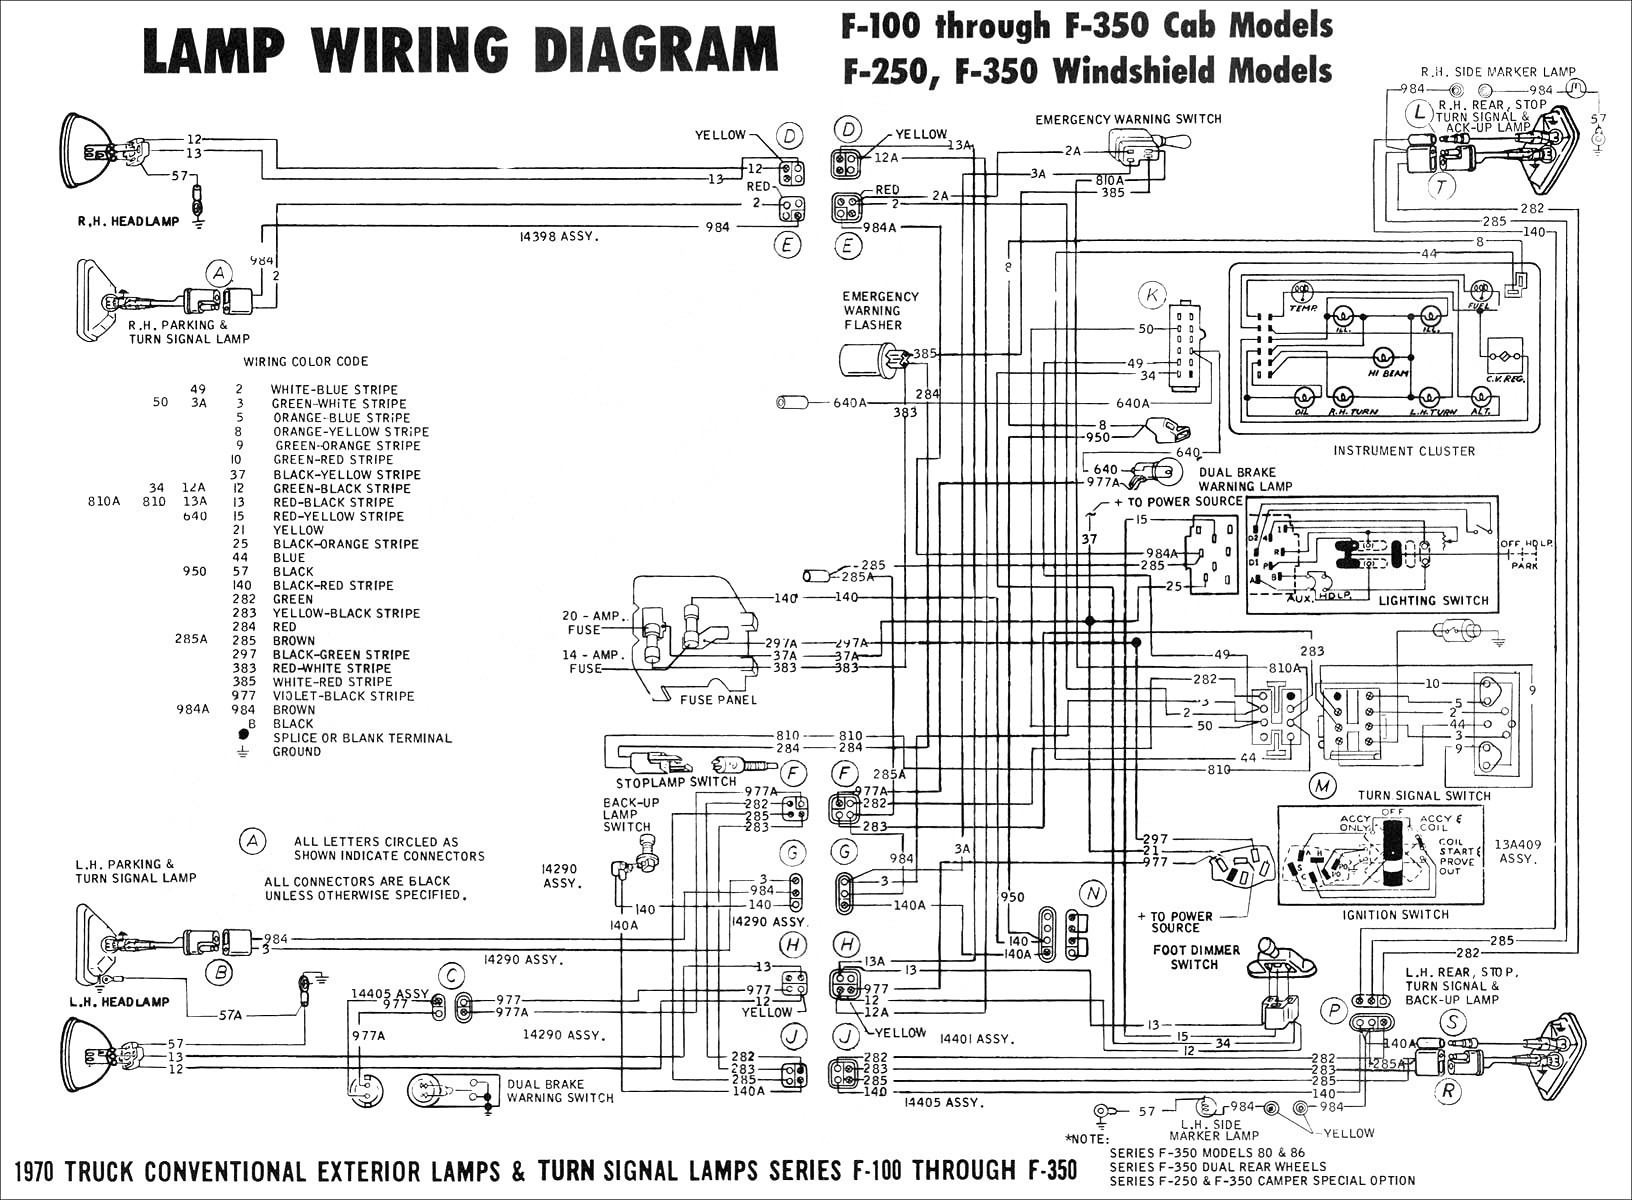 2003 Jeep Liberty 3 7 Engine Diagram Audi A4 Engine Diagram Experts Wiring Diagram • Of 2003 Jeep Liberty 3 7 Engine Diagram